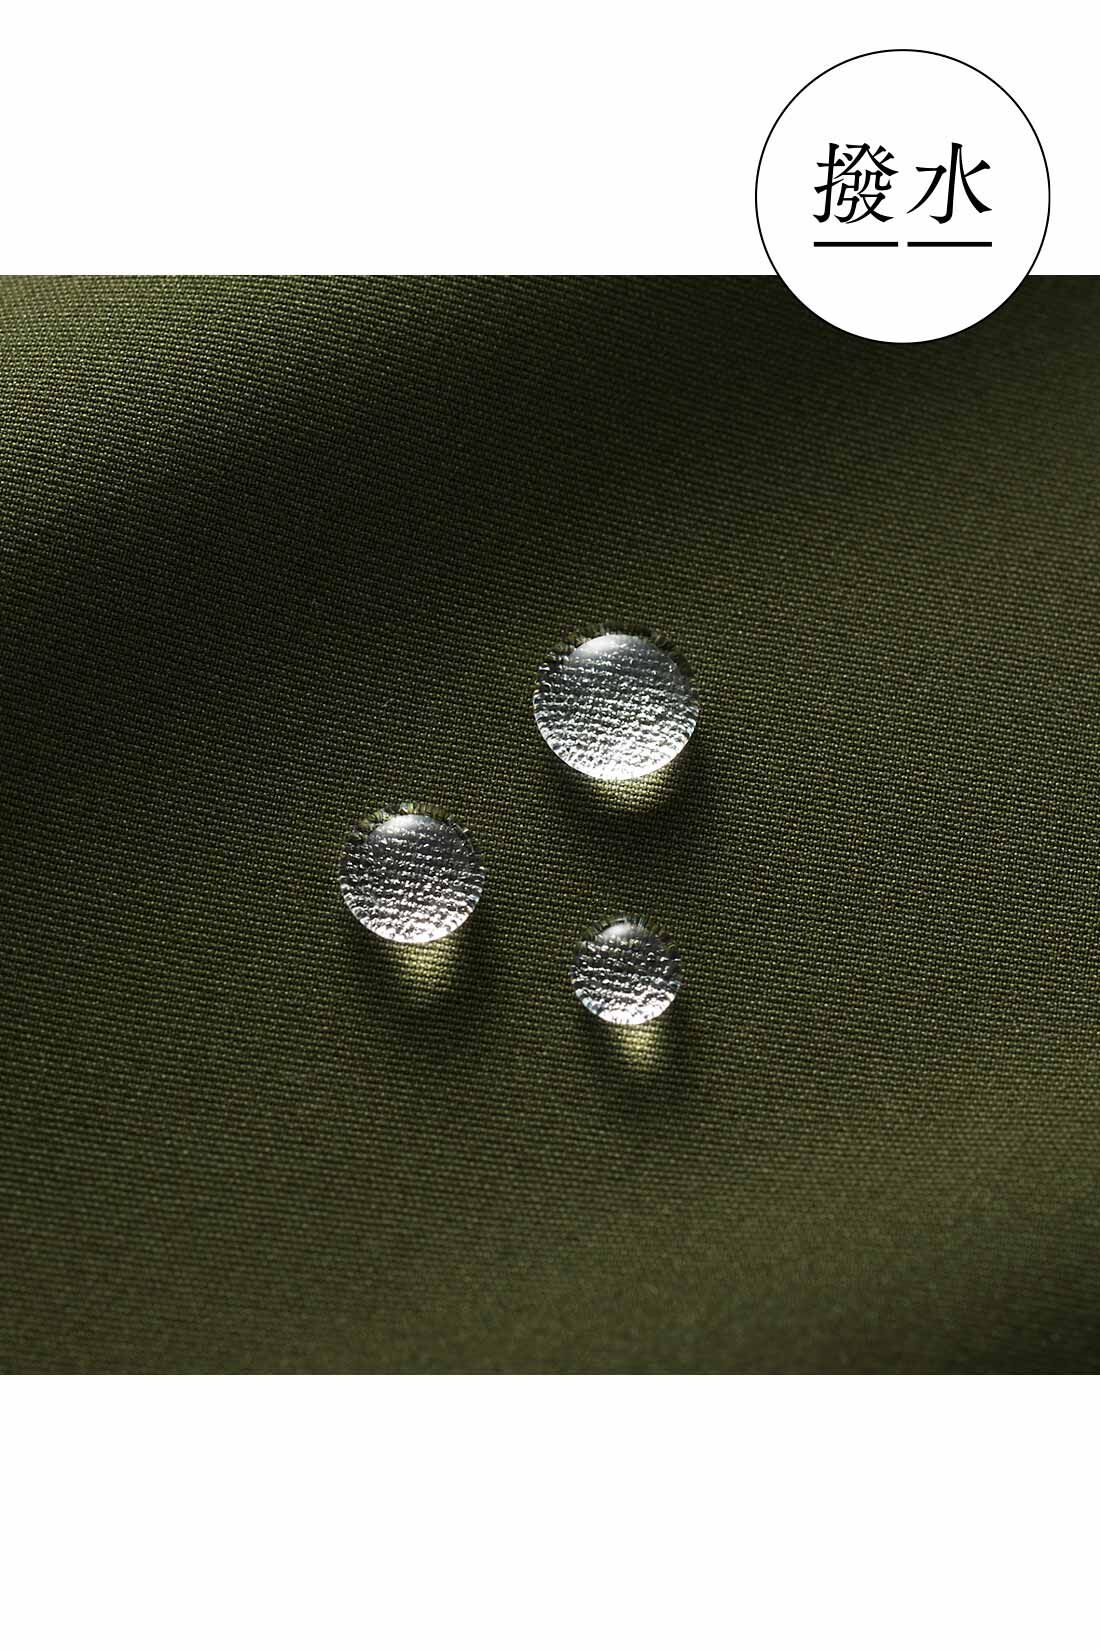 IEDIT|IEDIT[イディット]　WOODS コラボ 撥水（はっすい）フレアーカーゴスカート|マットでなめらかなポリエステル素材。急な雨でもあわてない撥水（はっすい）機能付き。